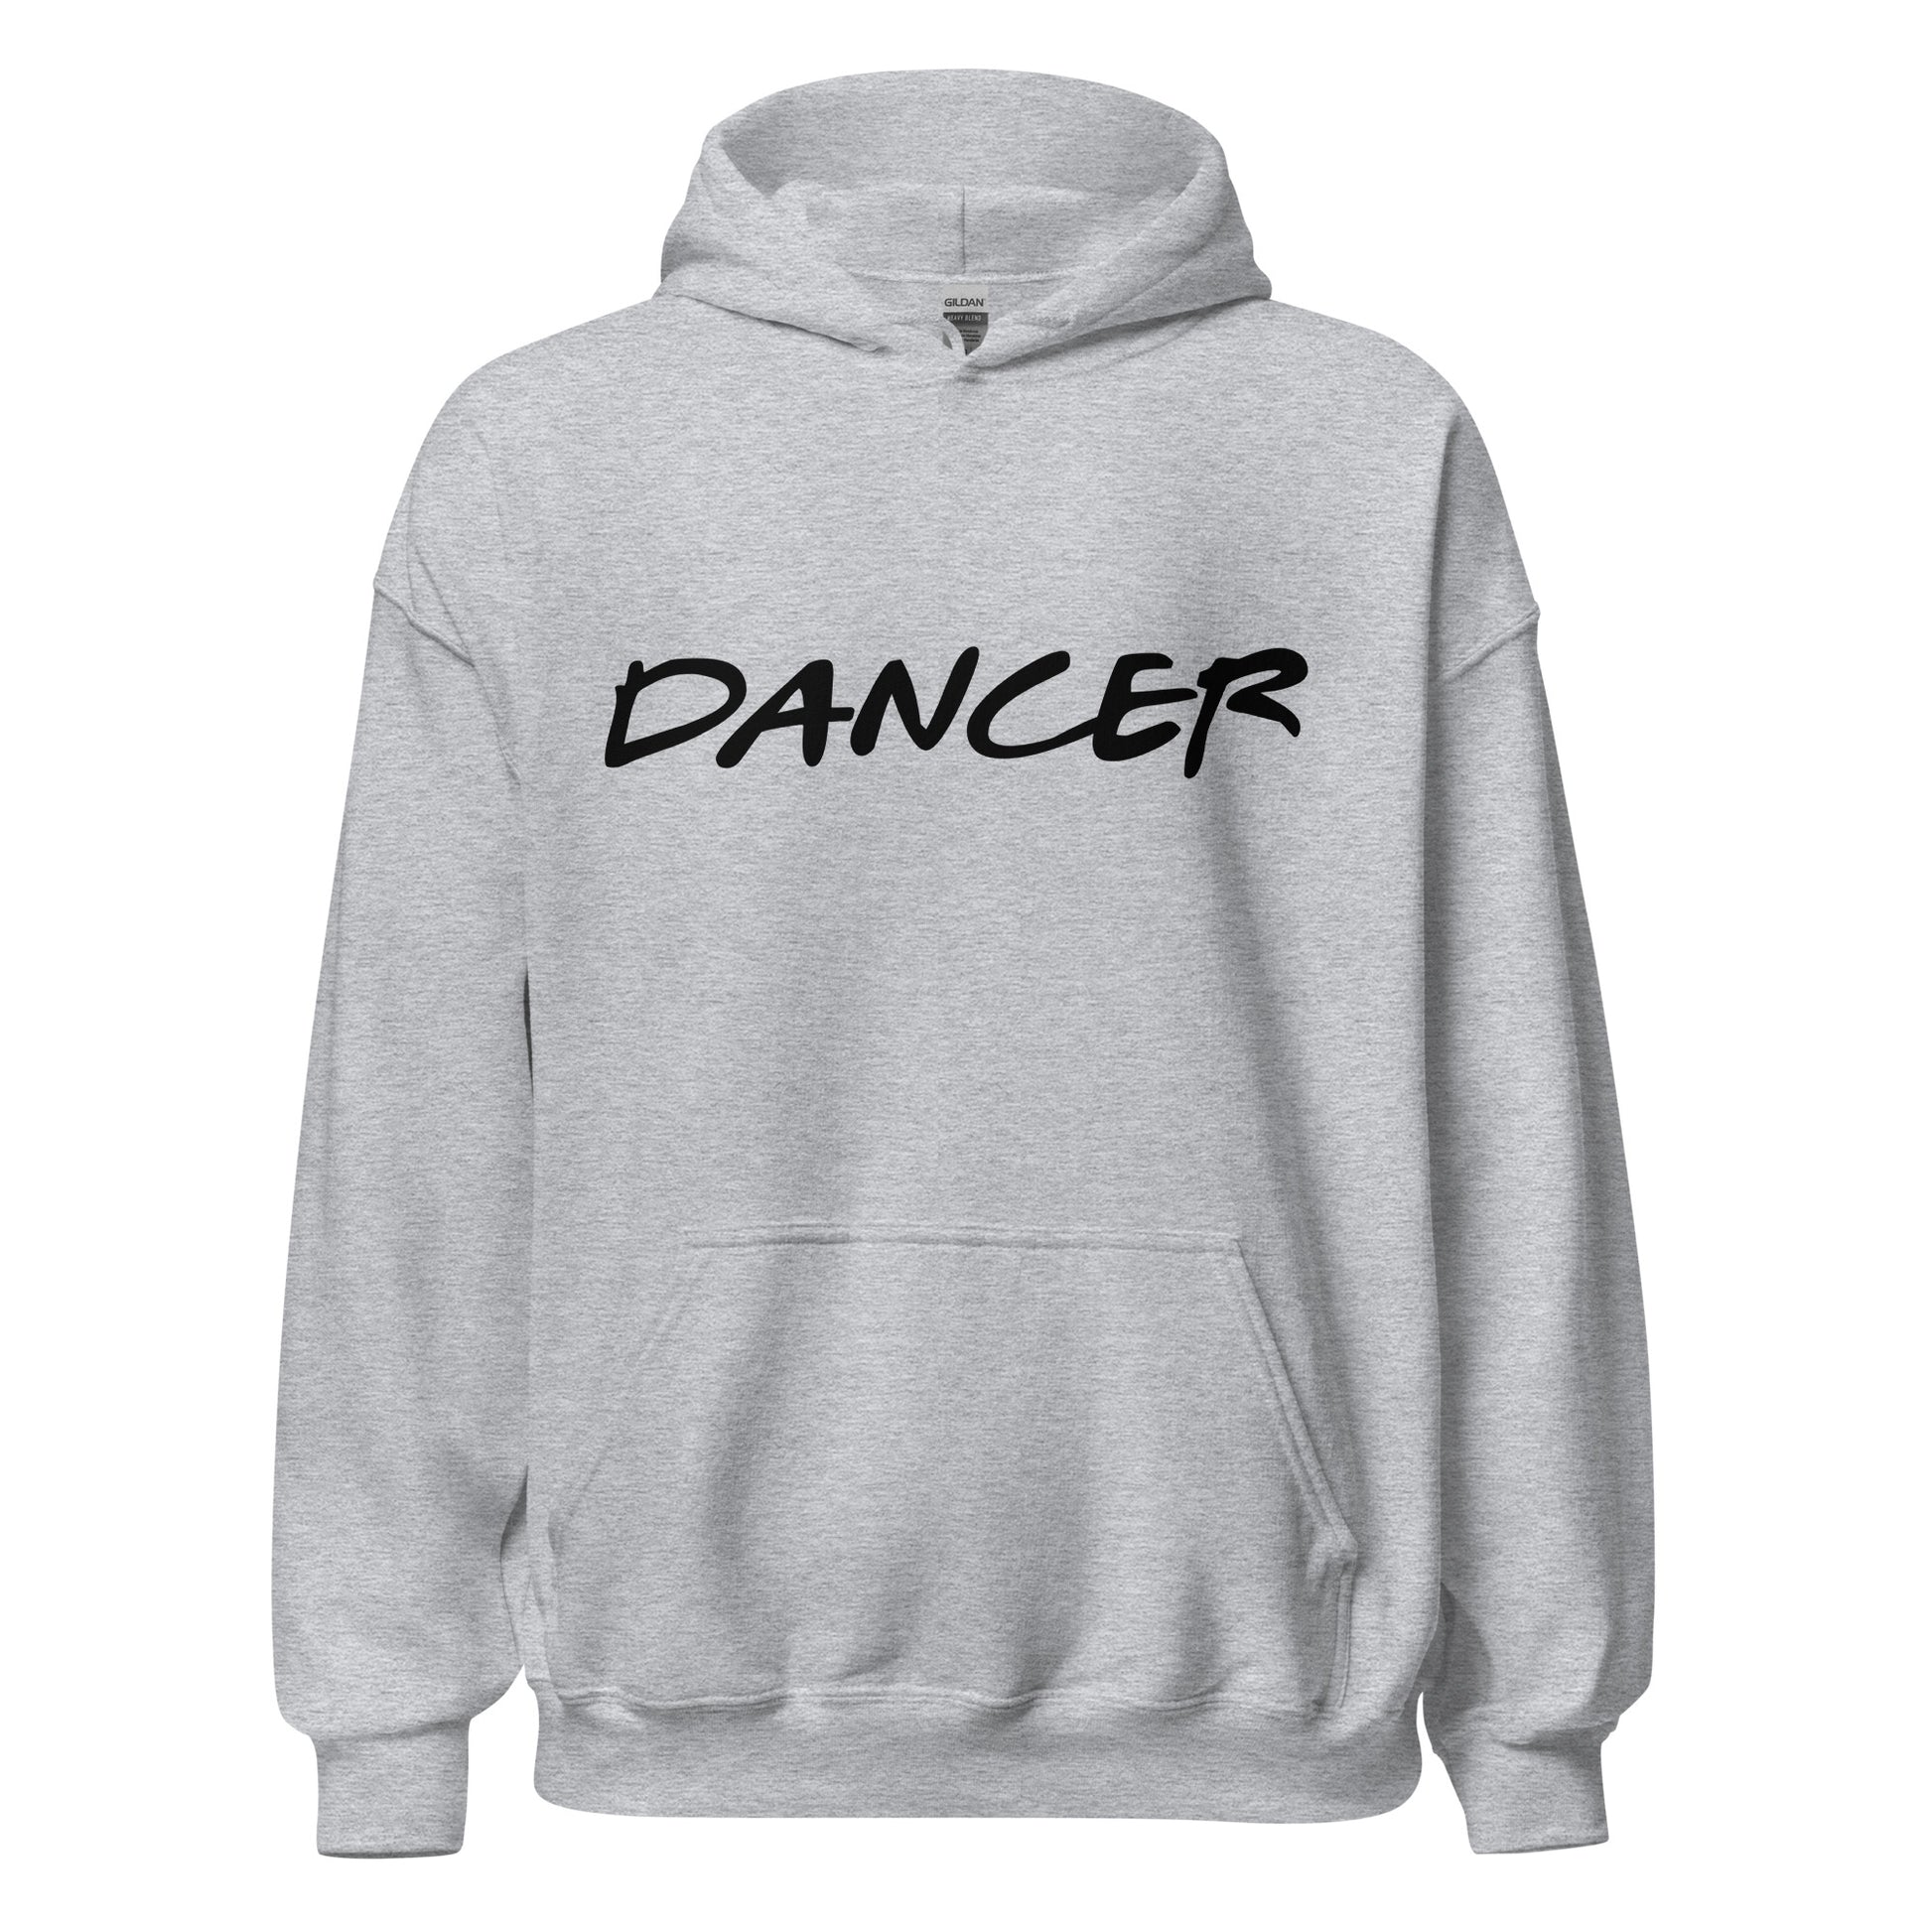 Dancer Hooded Sweatshirt - SD-style-shop